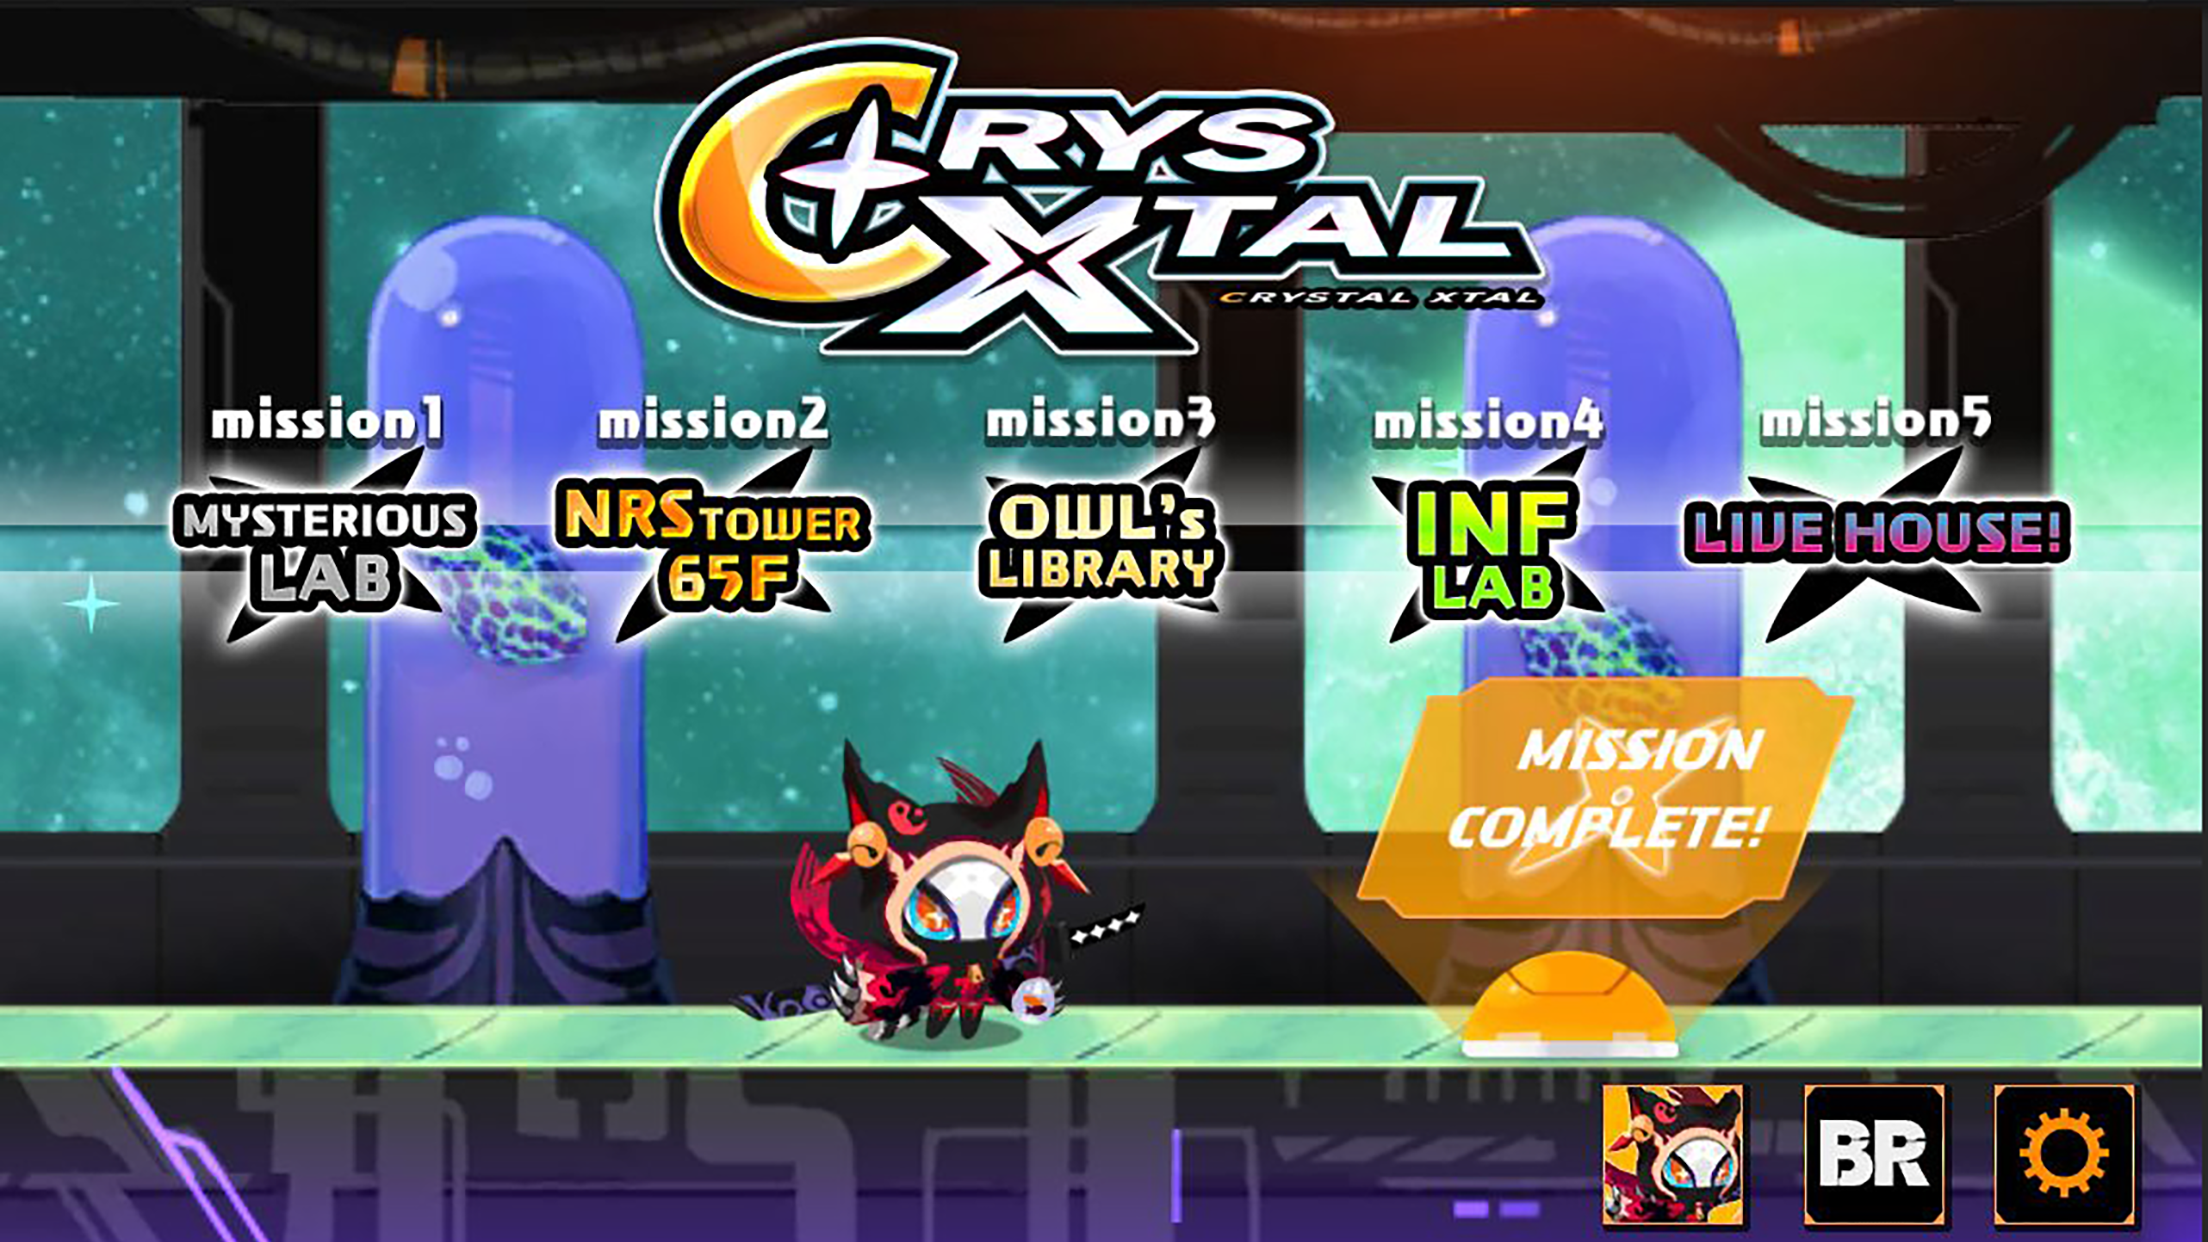 Screenshot 1 of CRYSTAL XTAL - Tir de chat ninja 1.3